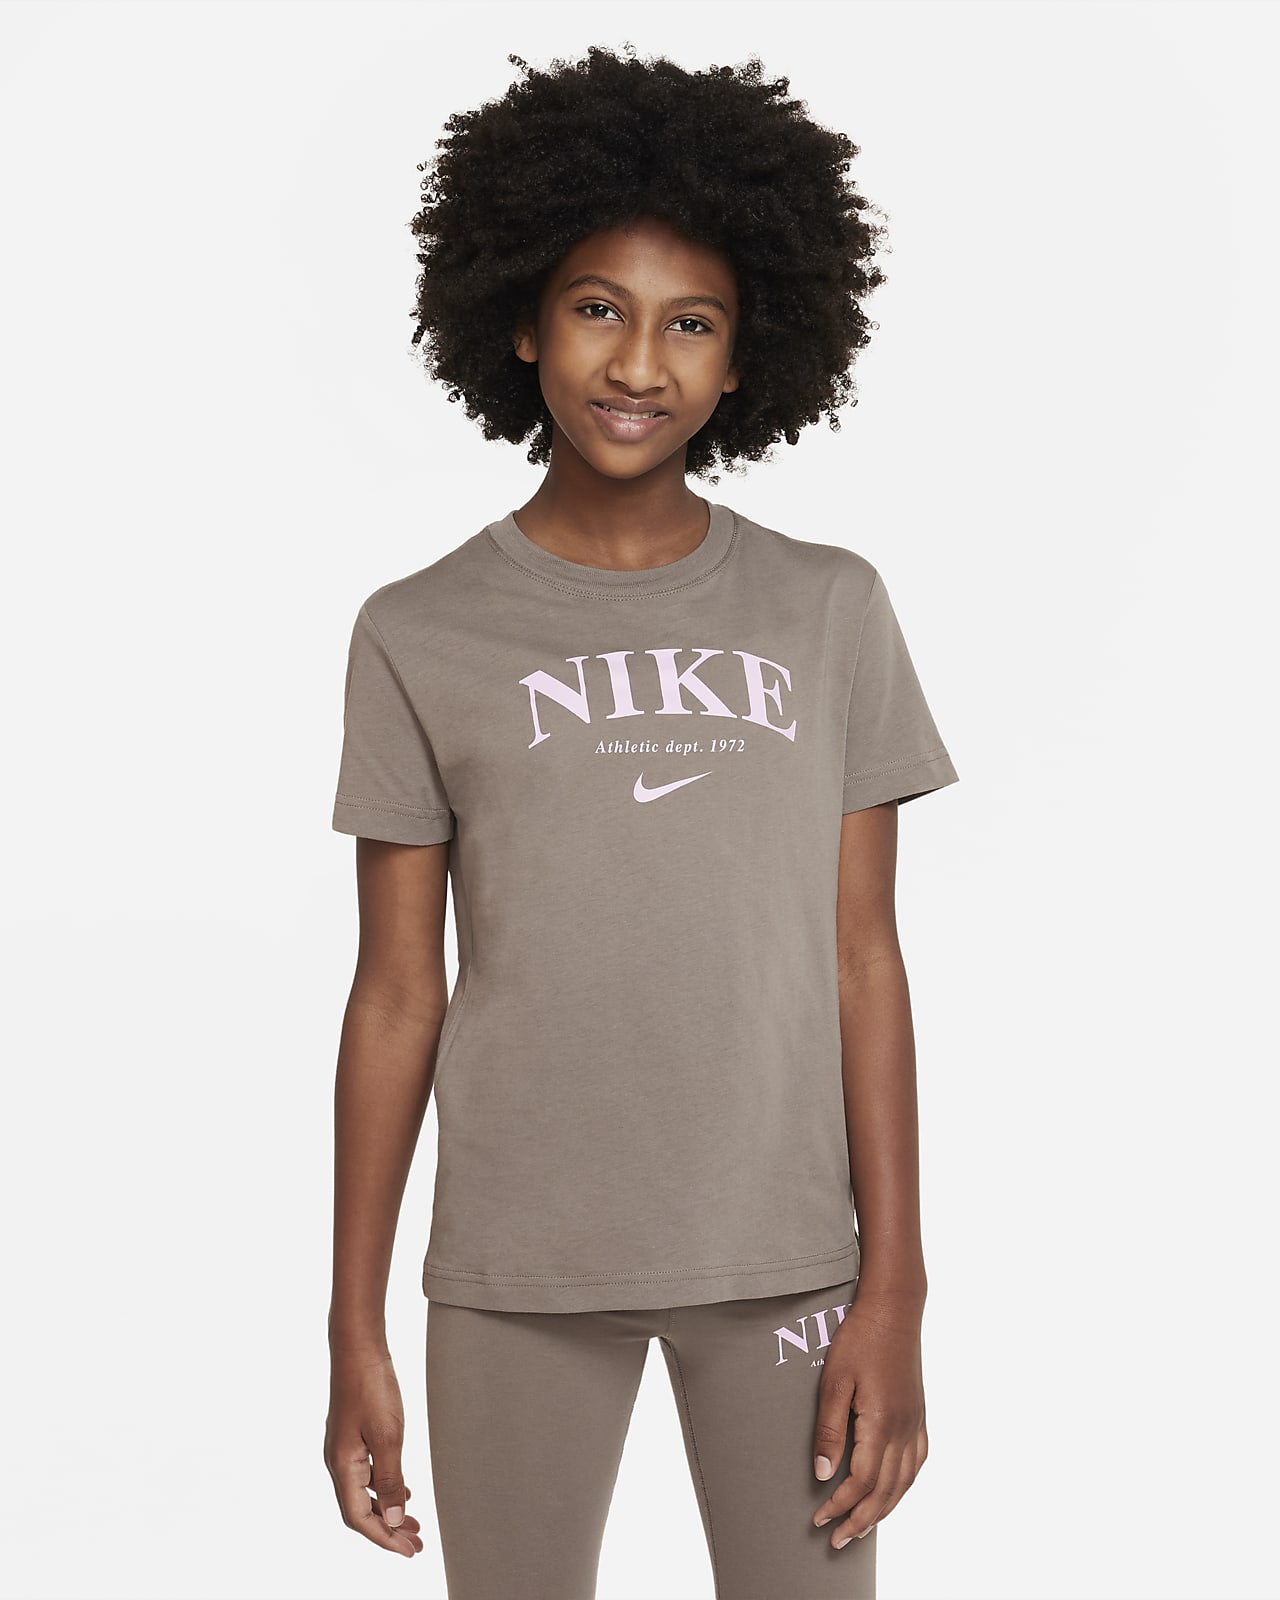 Tee-shirt Nike Sportswear Trend pour Fille plus âgée